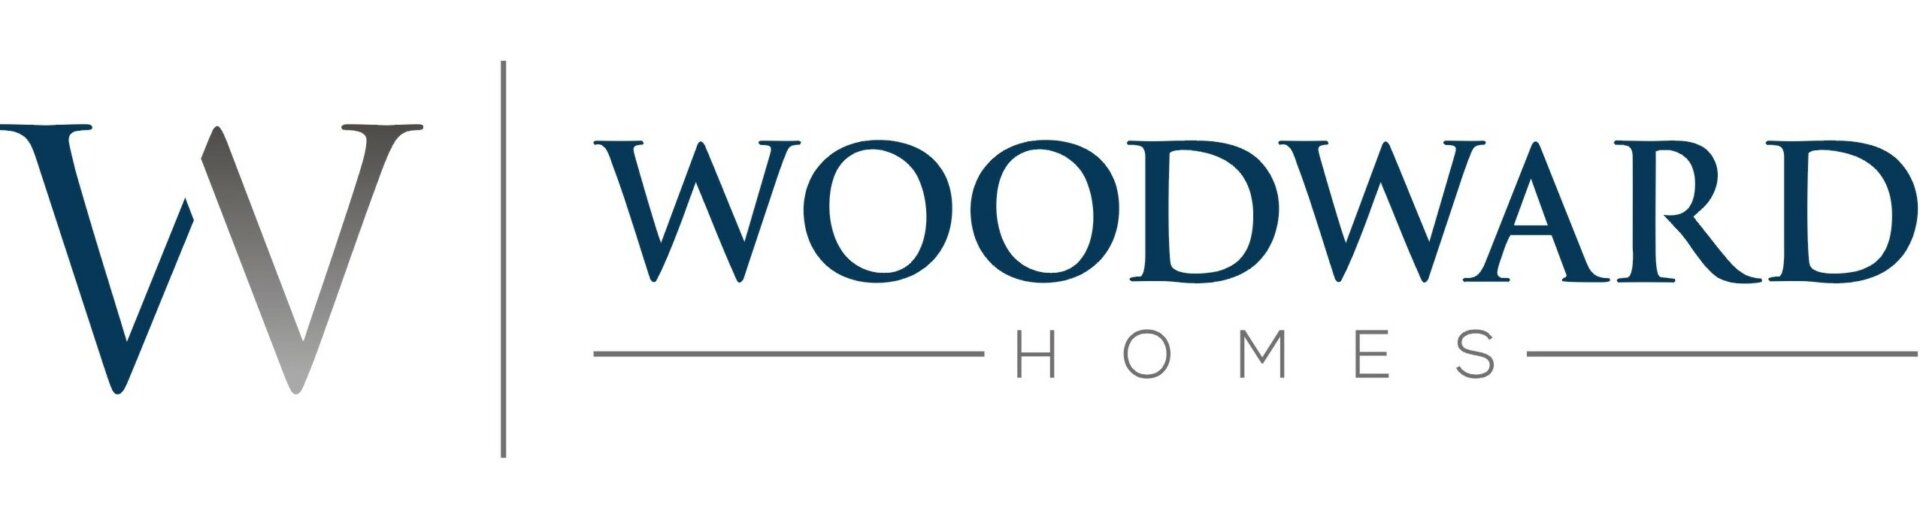 Woodward Homes logo